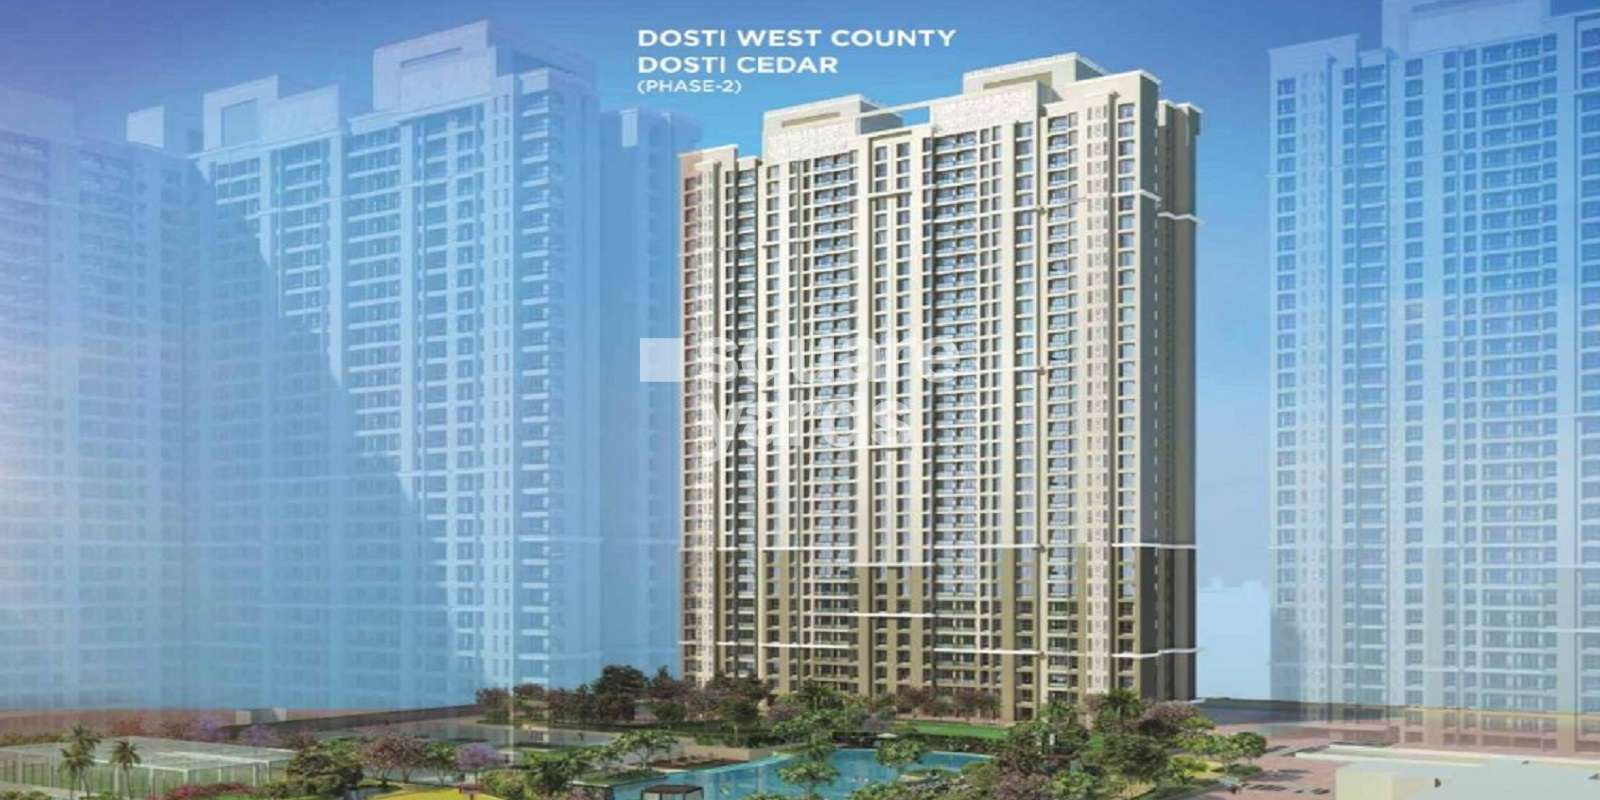 Dosti West County Phase 2 Dosti Cedar Cover Image